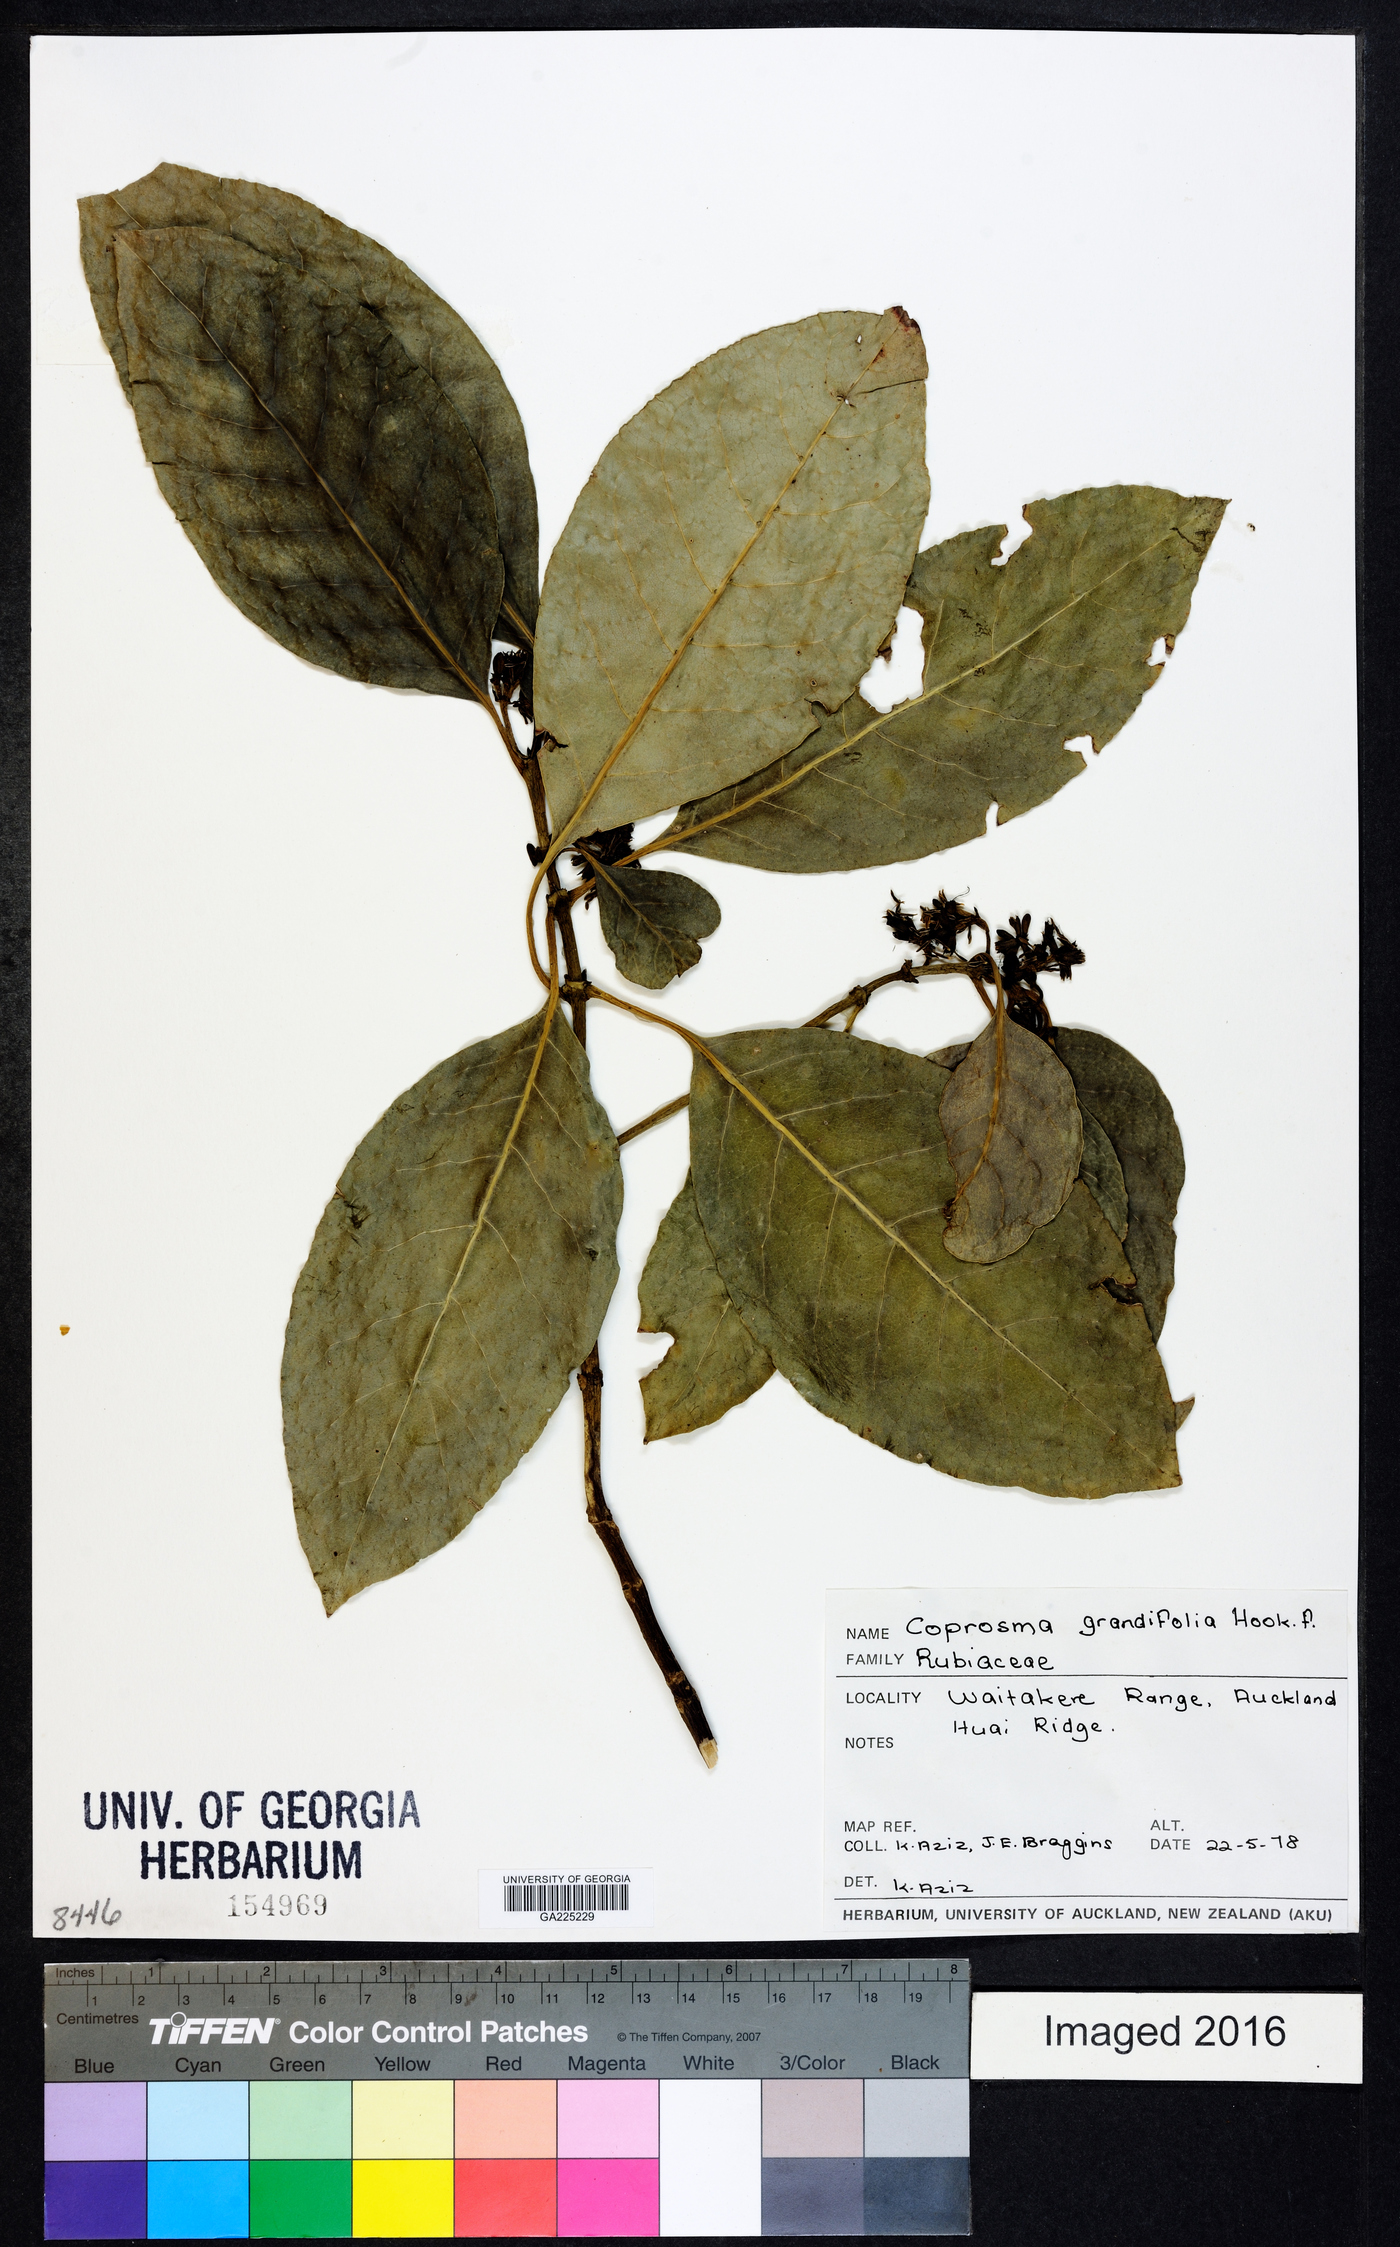 Coprosma grandifolia image